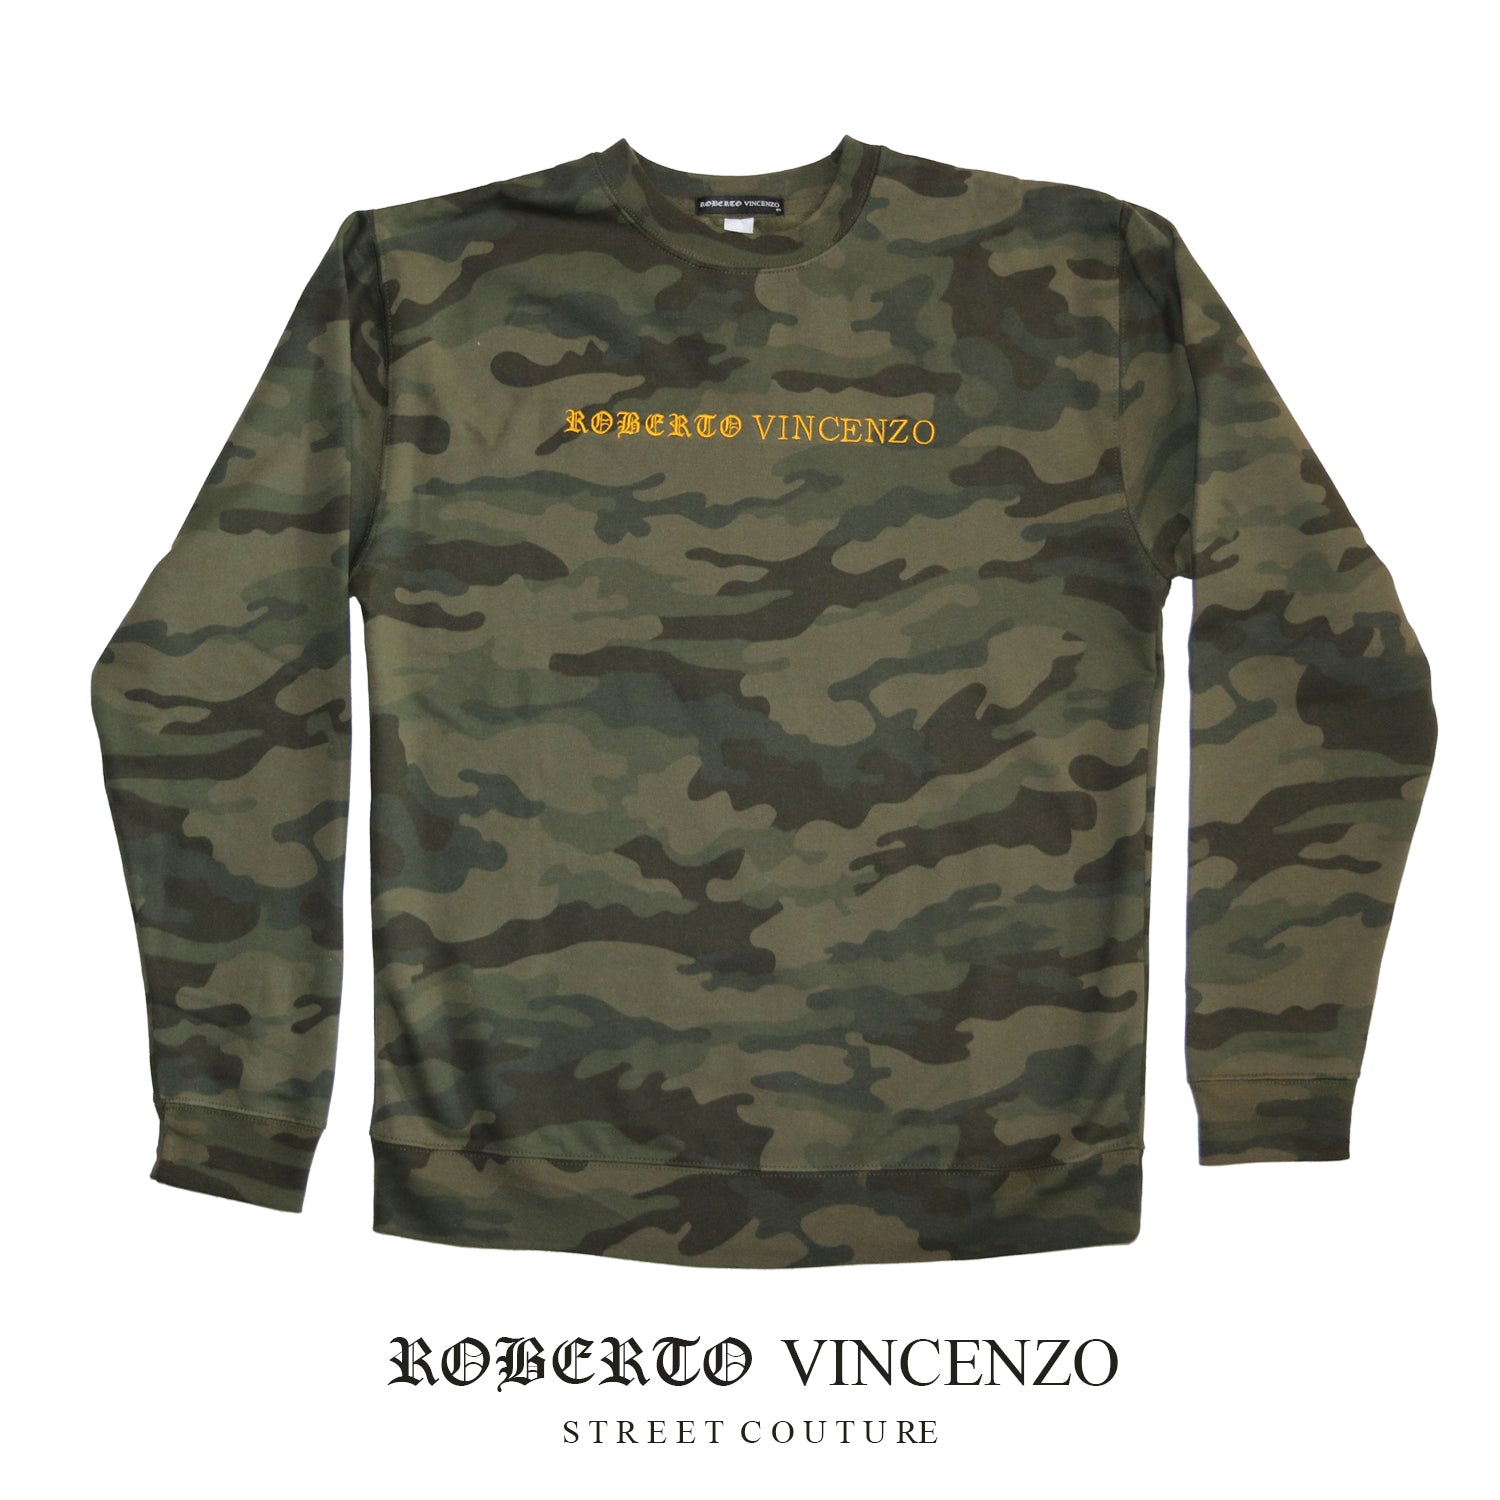 Roberto Vincenzo Crew Neck sweater (Forest Camo)